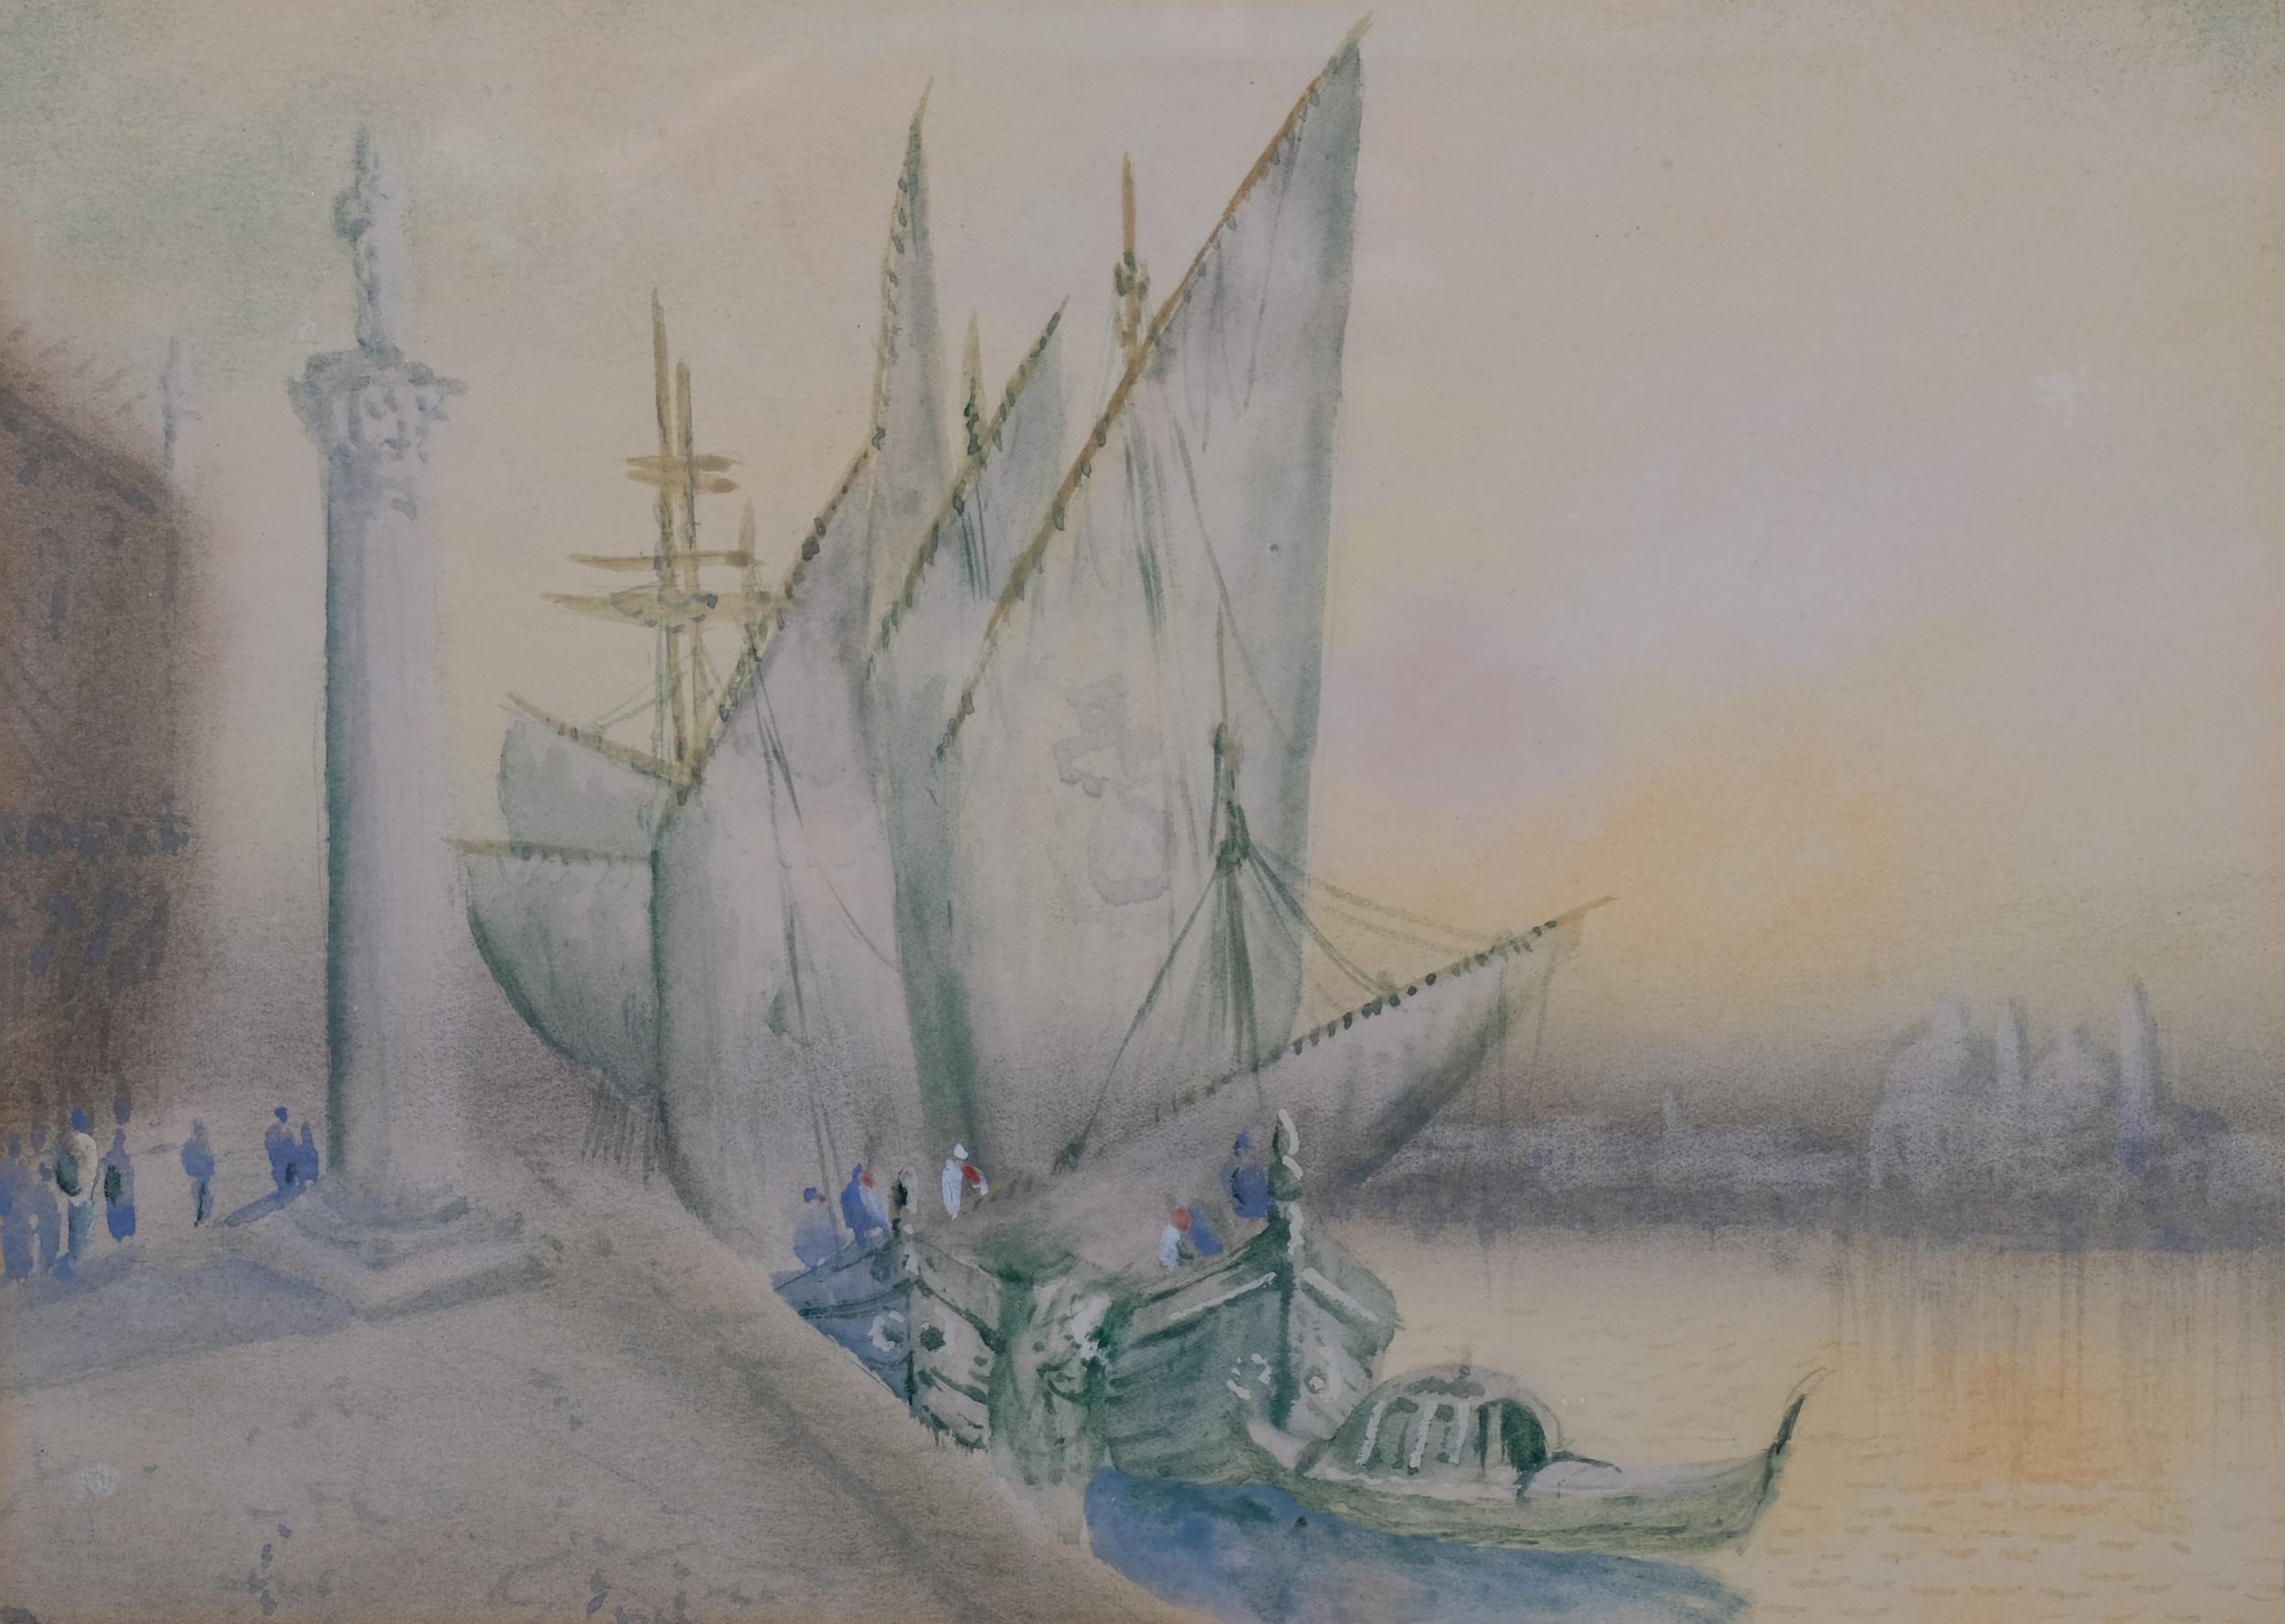 William Meadows (active 1870 - 1893), Venetian scene, watercolour, 20cm x 28cm, framed